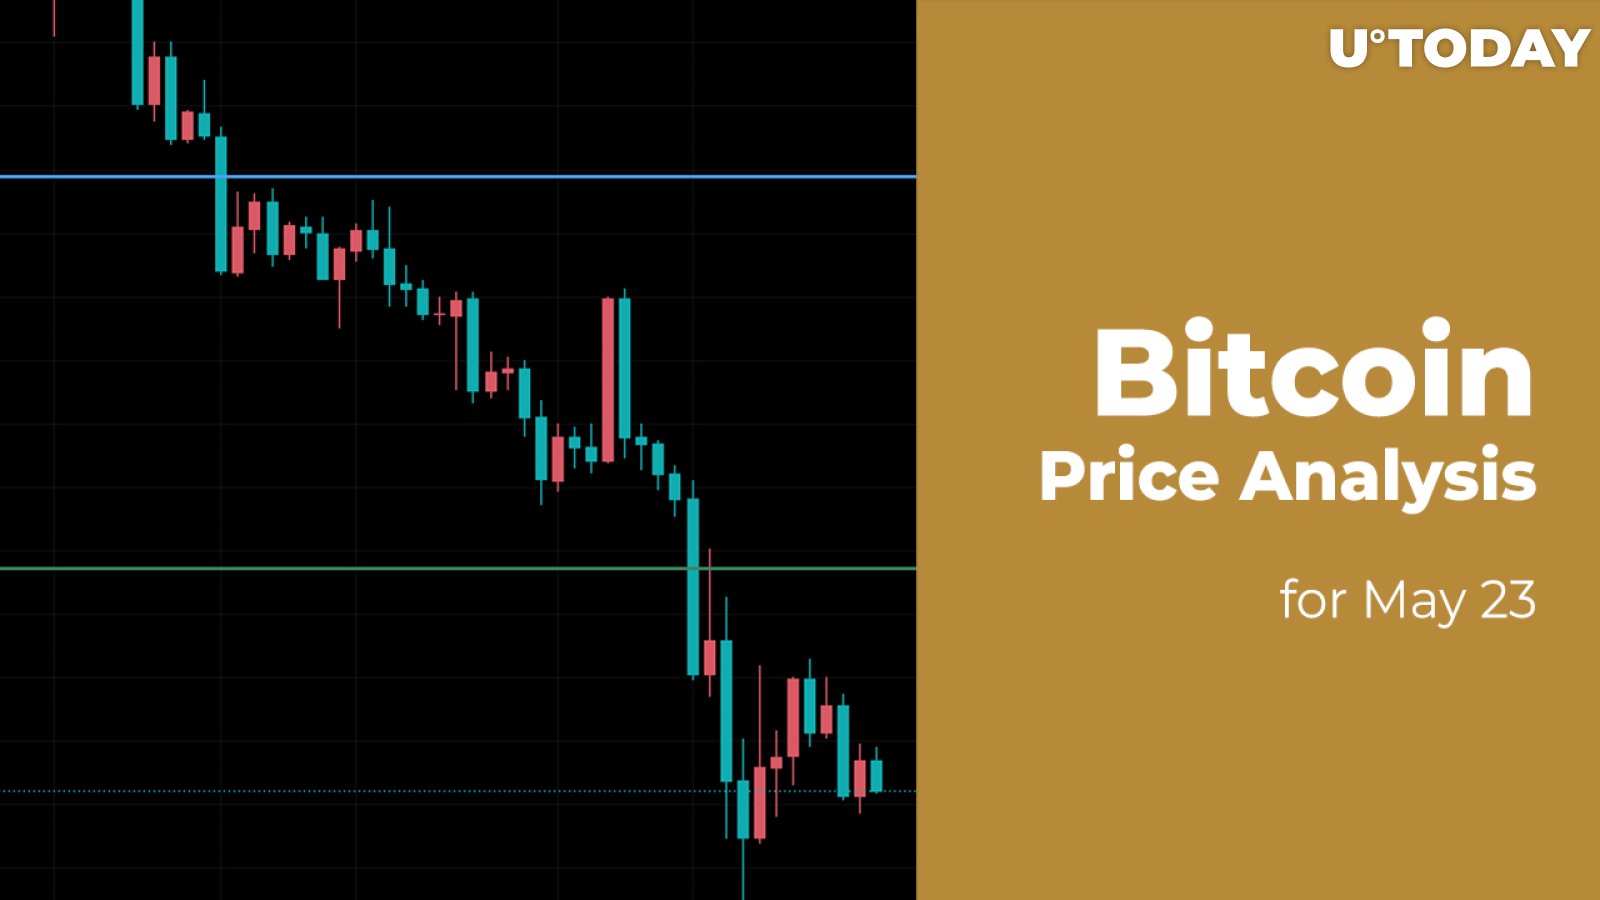 Bitcoin (BTC) Price Analysis for May 23